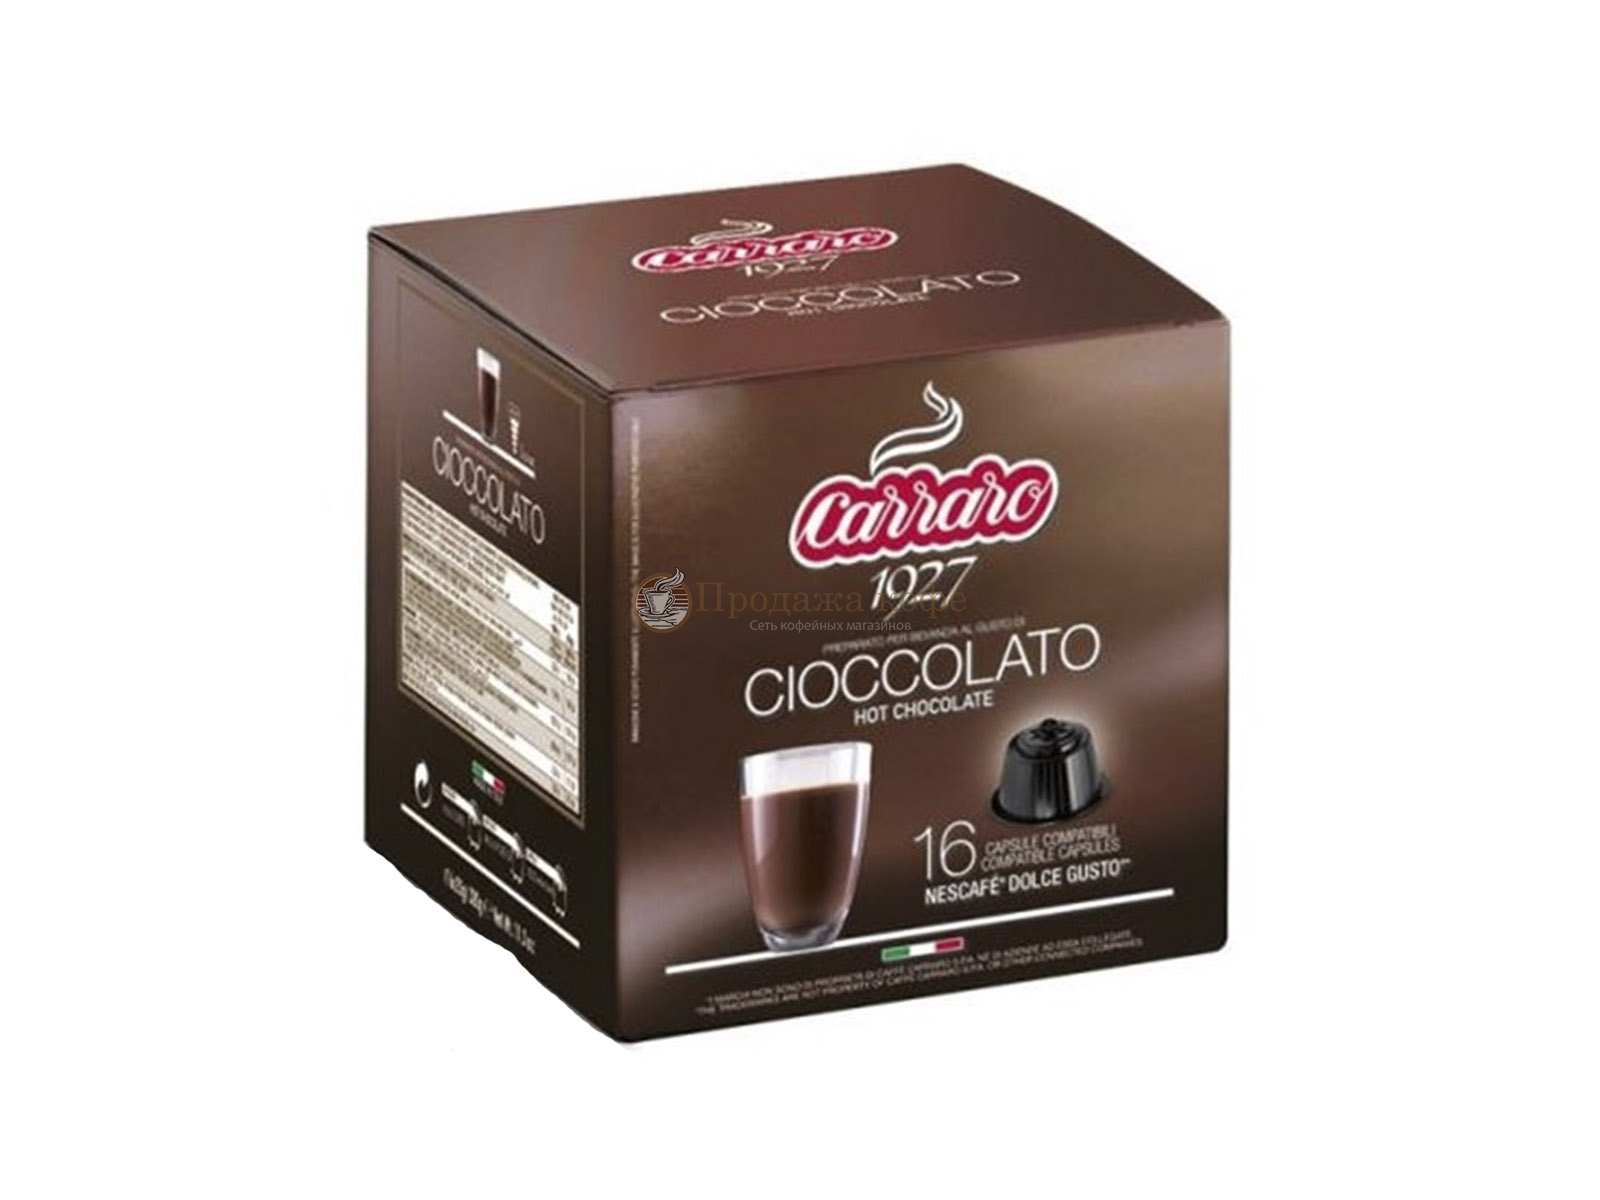 Кофе в капсулах Carraro Cioccolato (Караро Чоколато), упаковка 16 капсул,  формат Dolce Gusto (Дольче Густо)